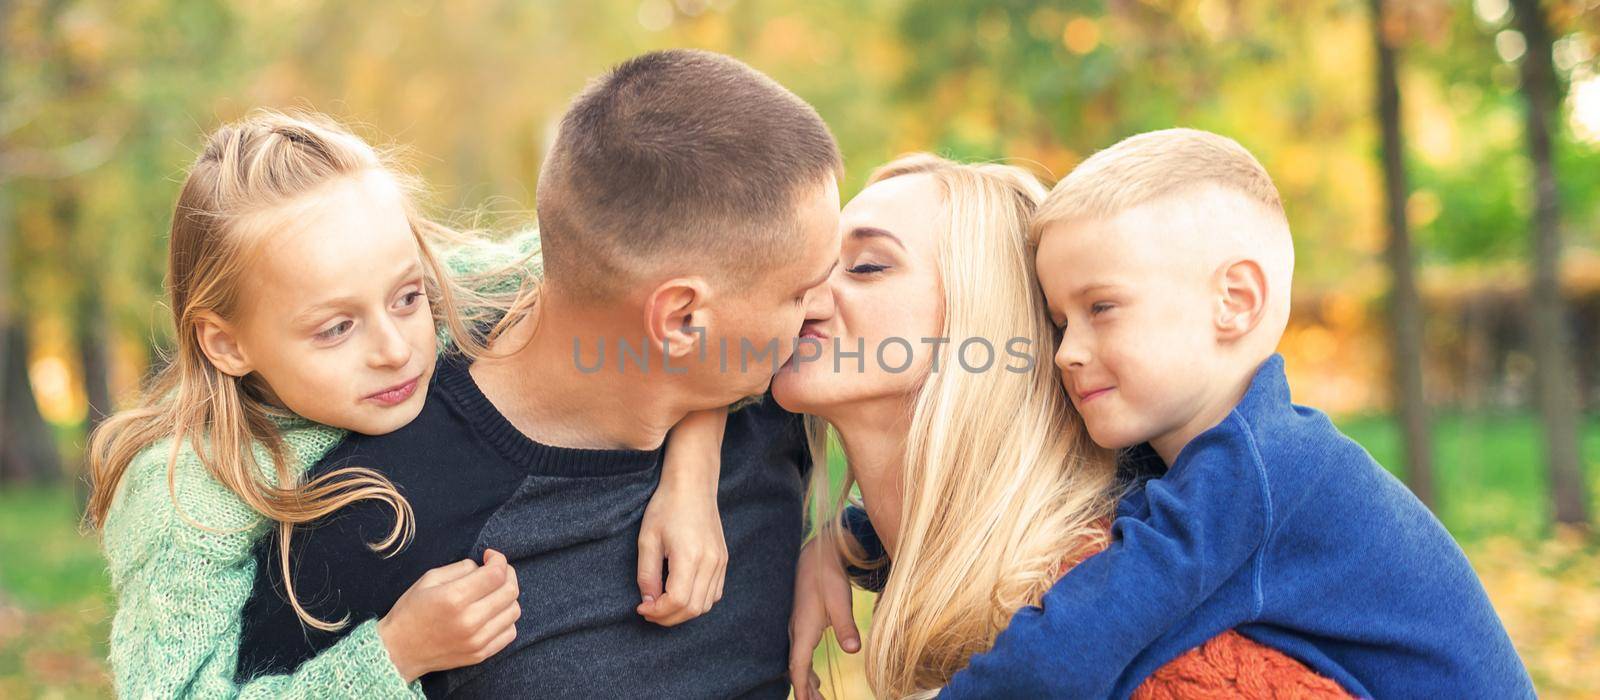 Portrait of young family in autumn park by okskukuruza